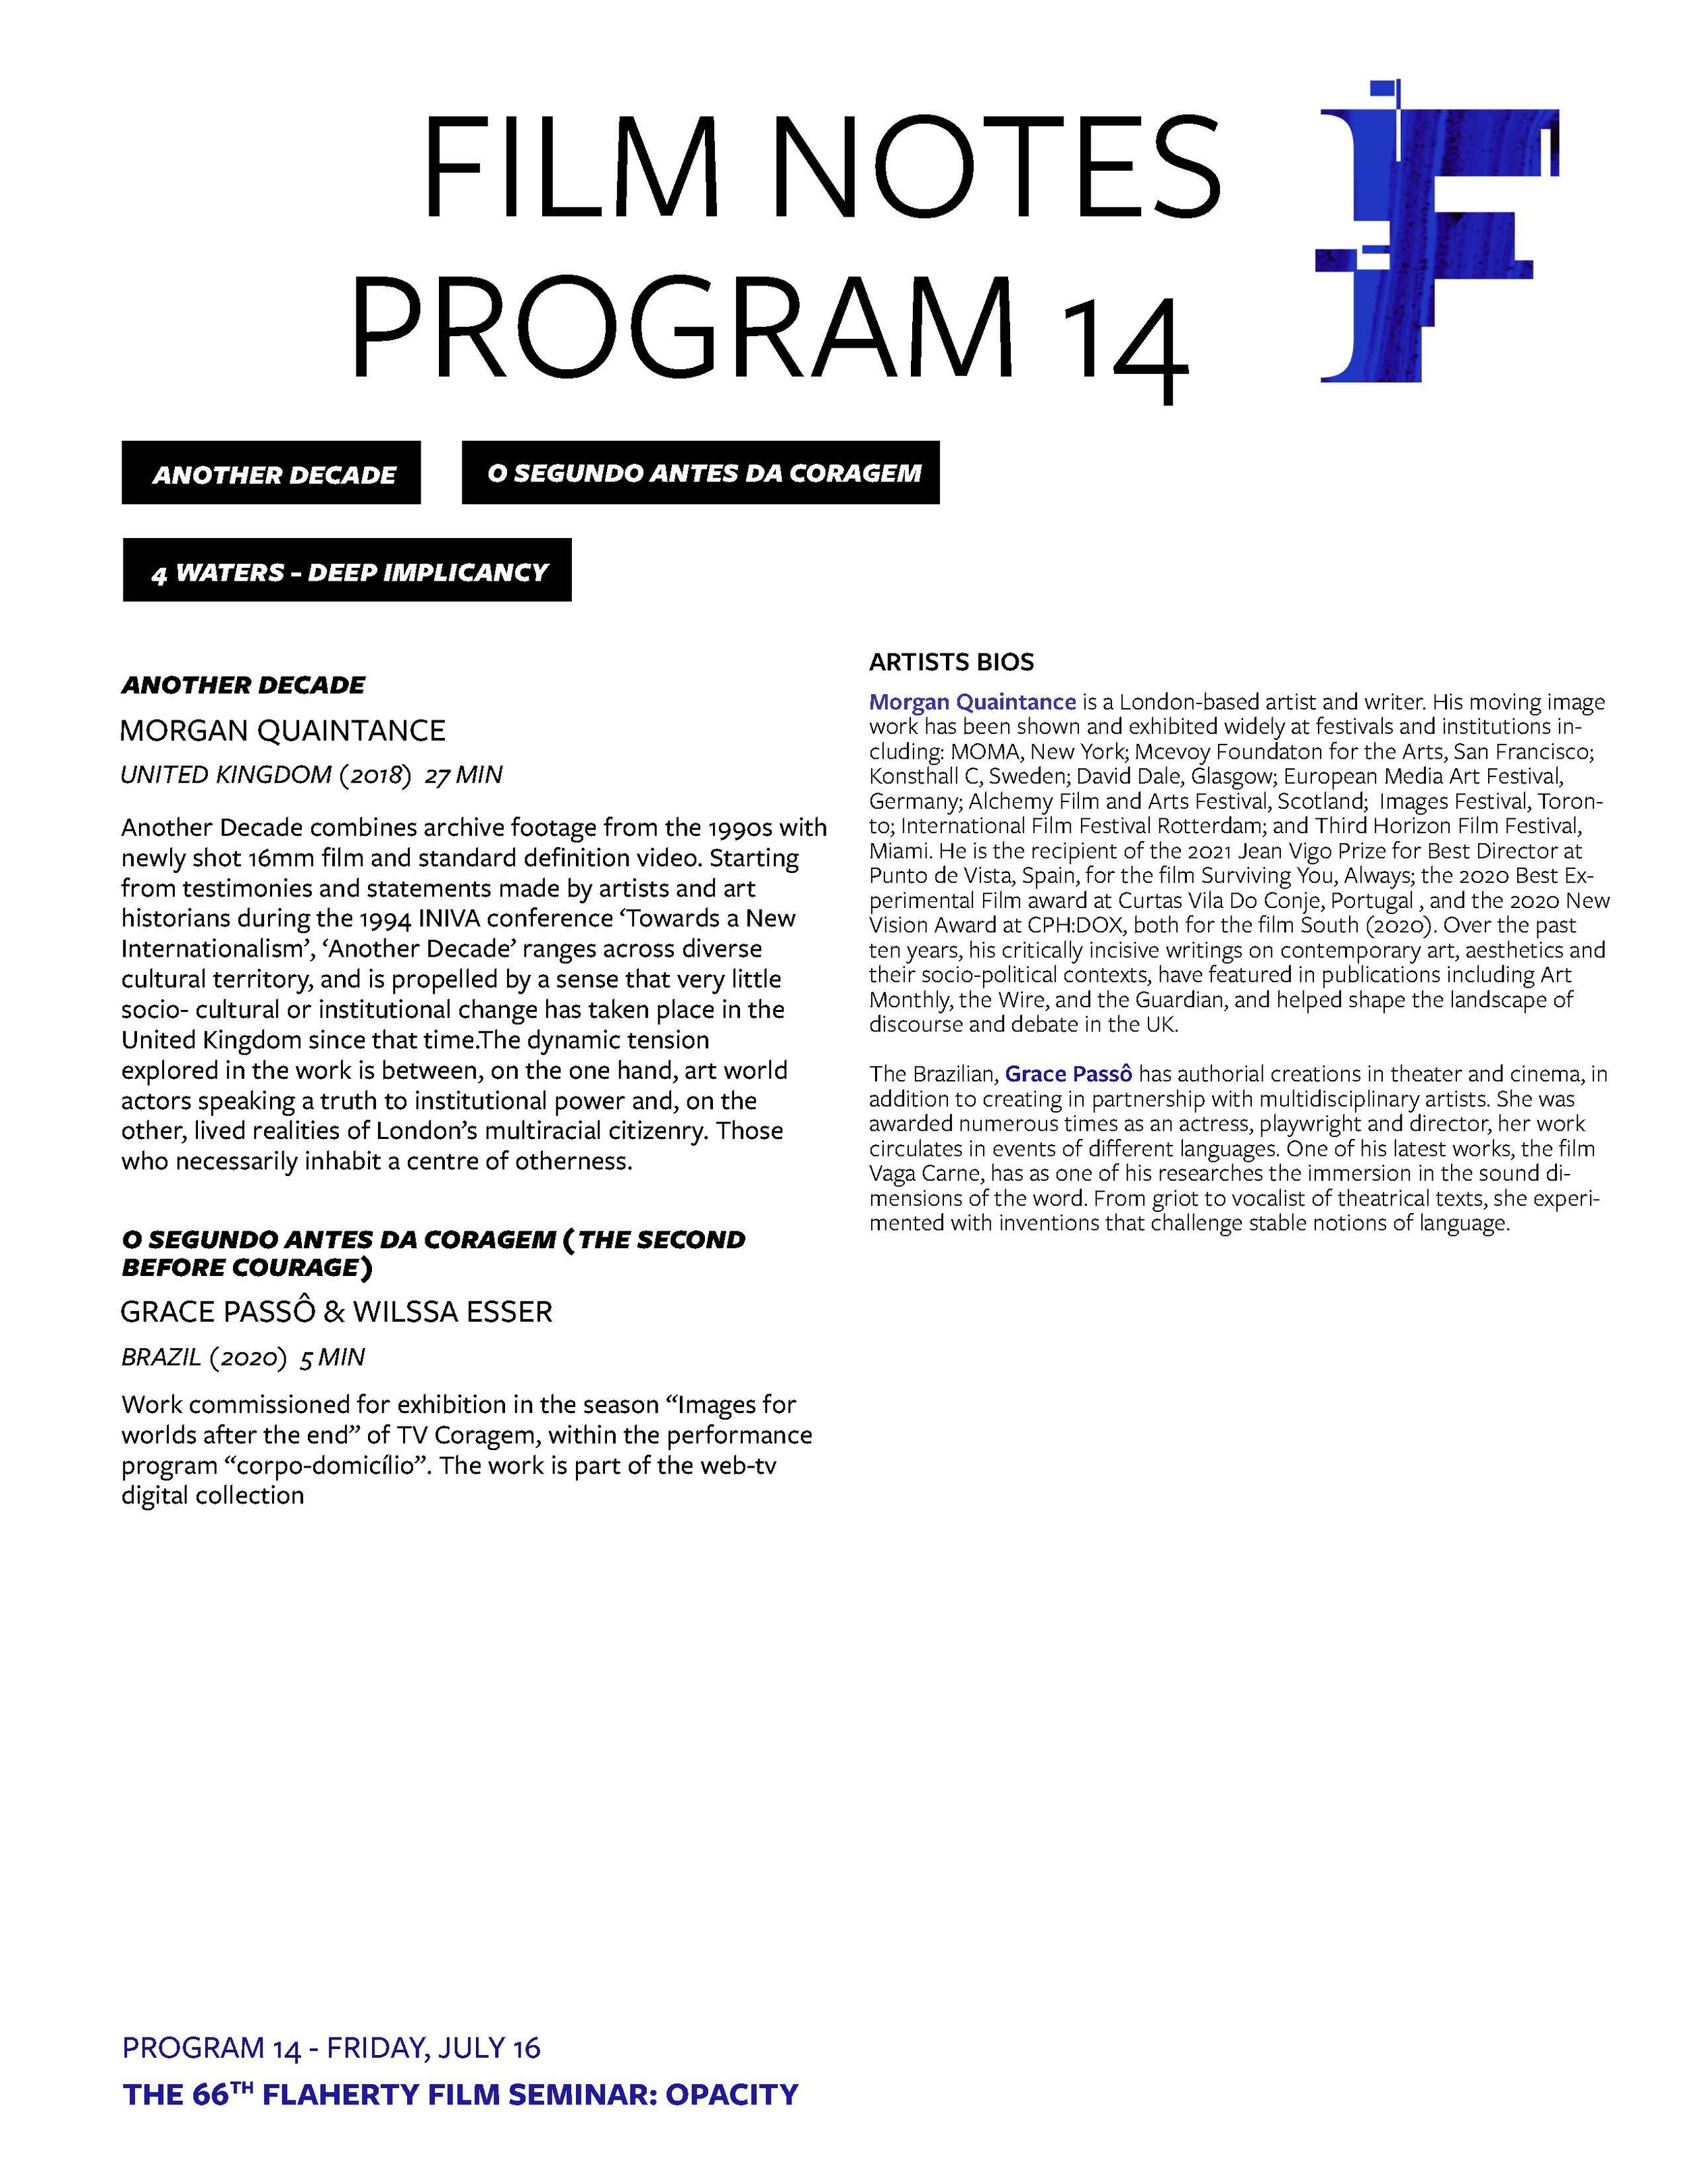 Program 14 Film Notes_Page_1.jpg